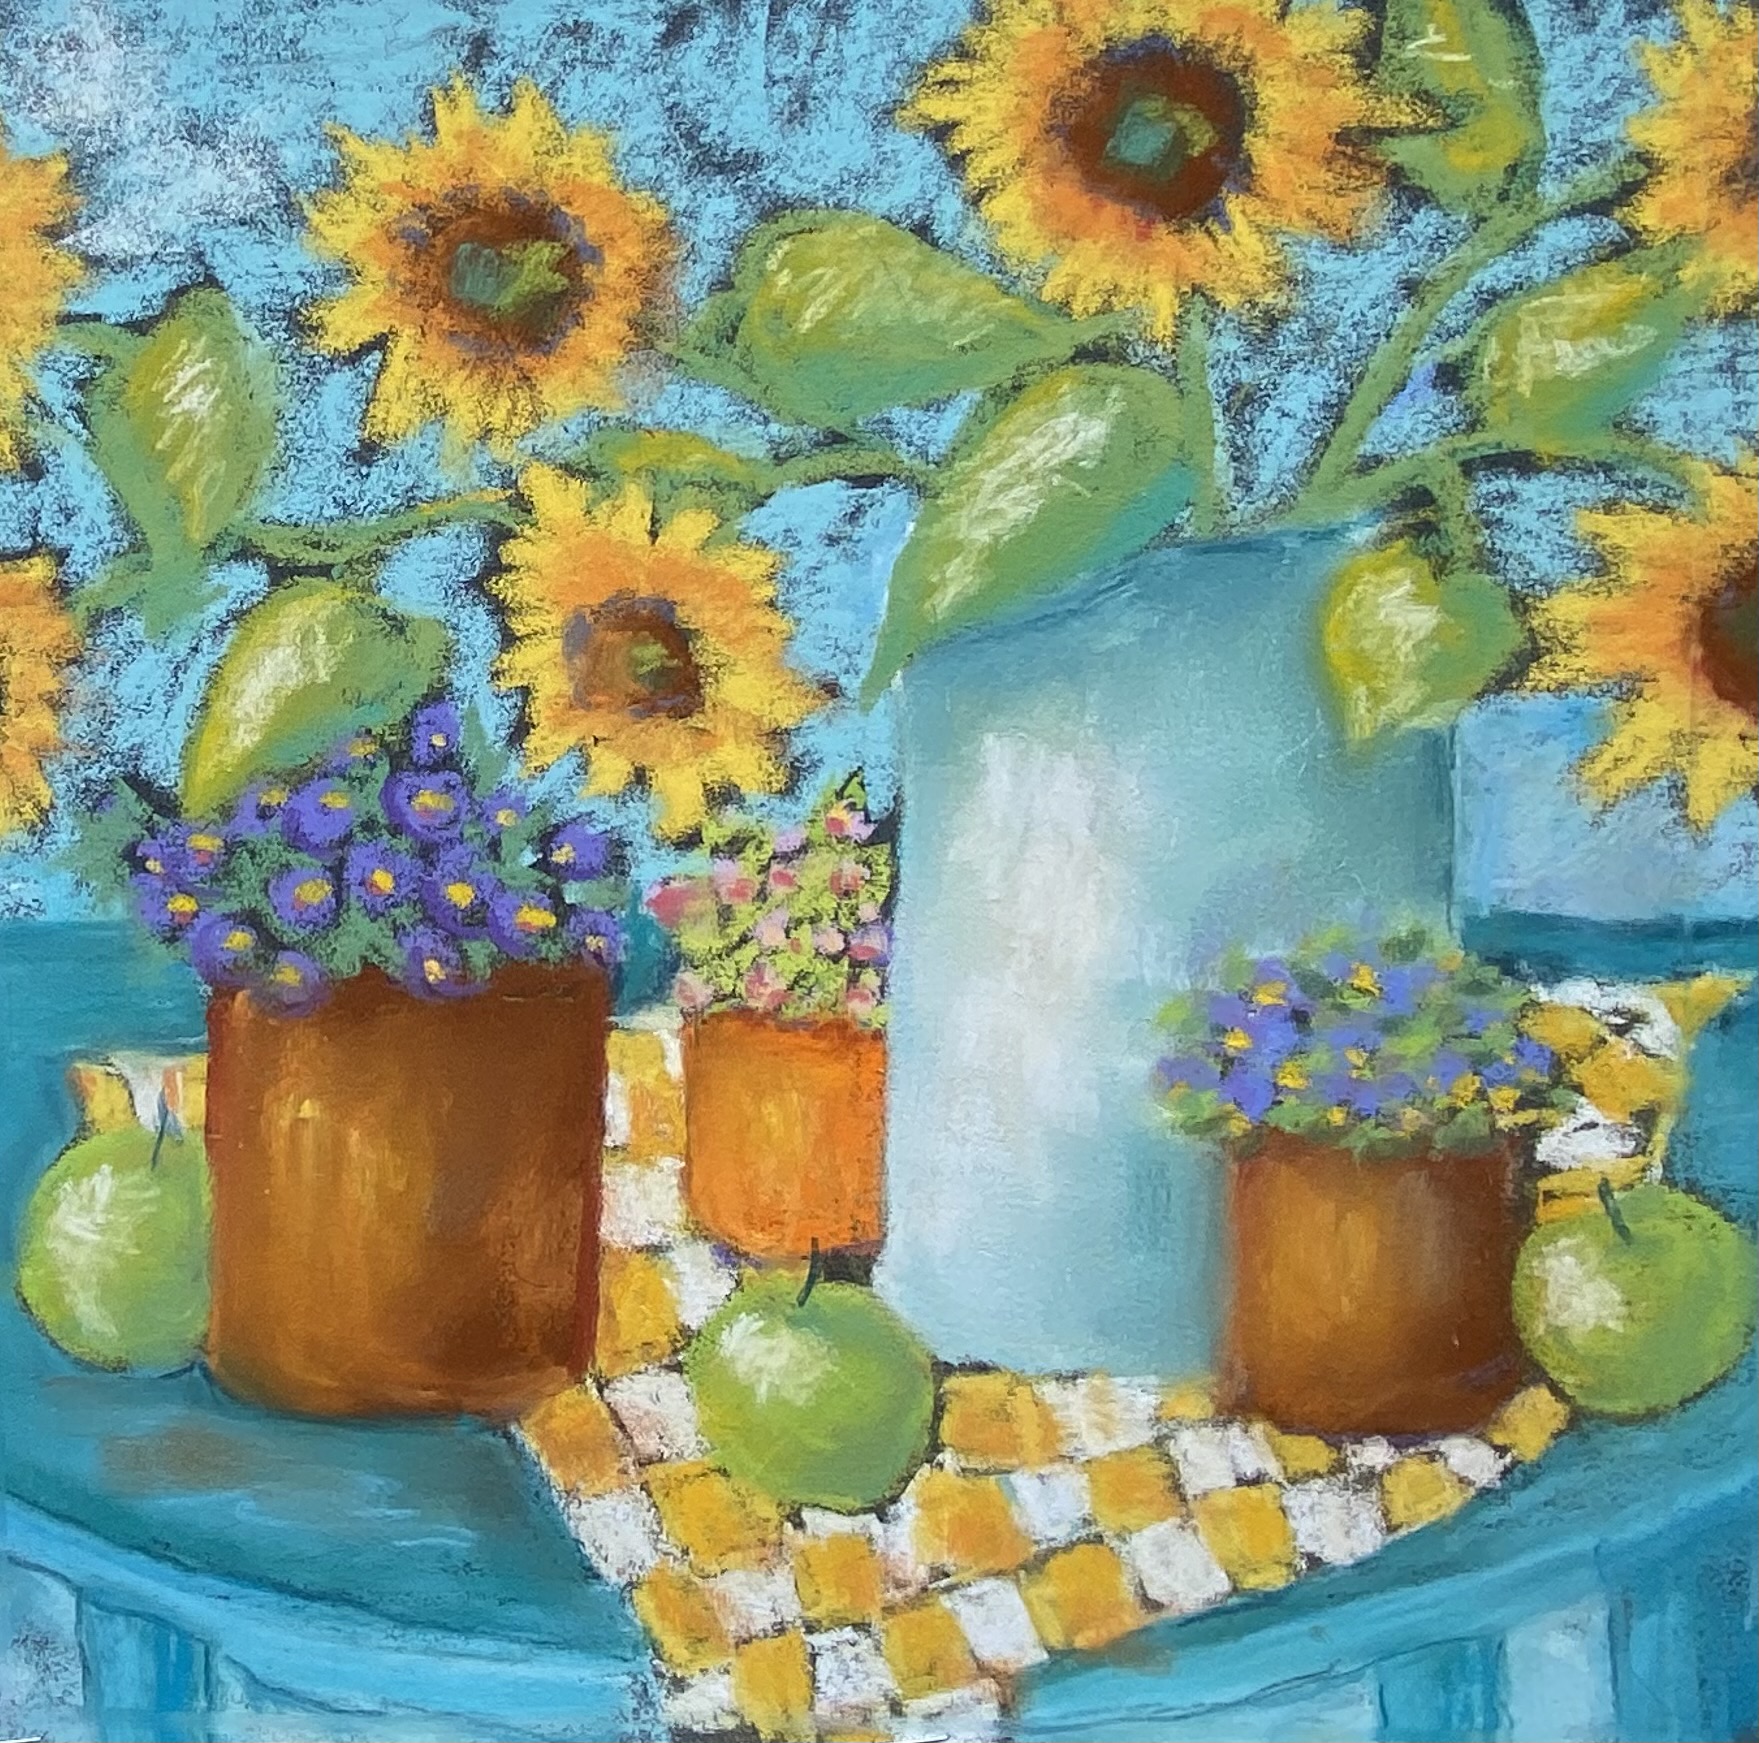 Pat Olson "Sunflowers in Blue Vase" Pastels 16x16